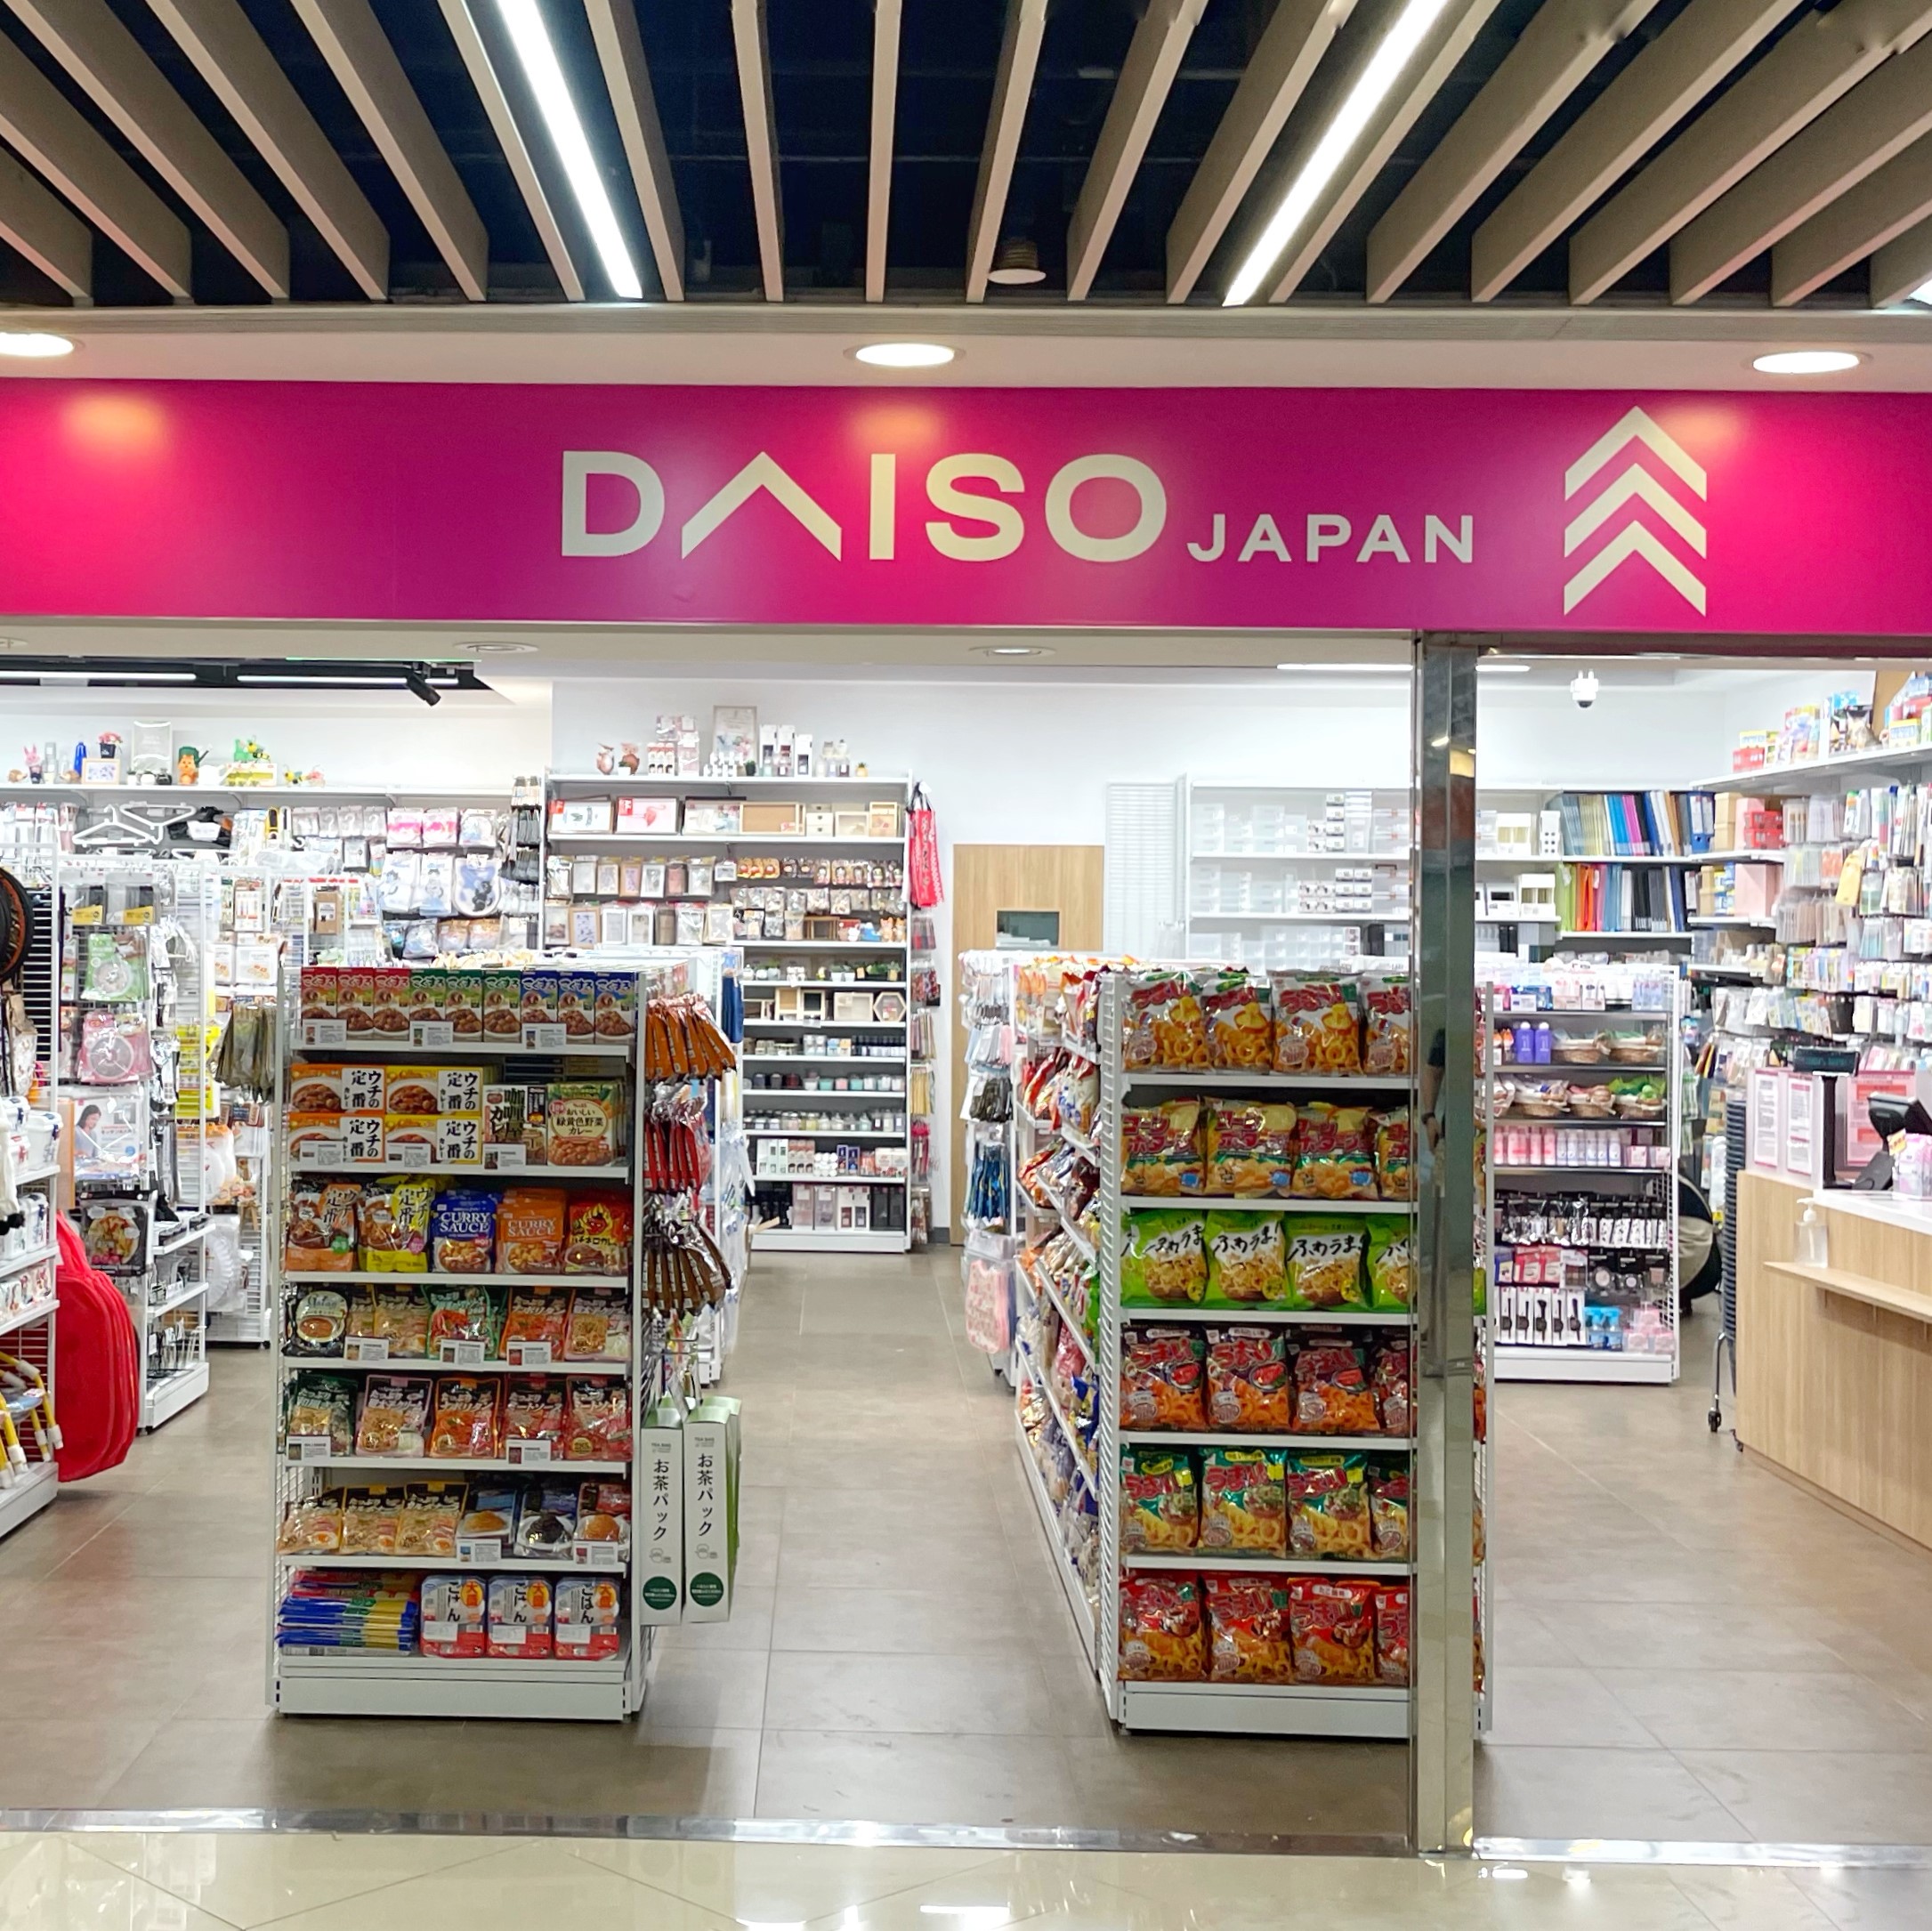 Daiso Japan 运头塘店 